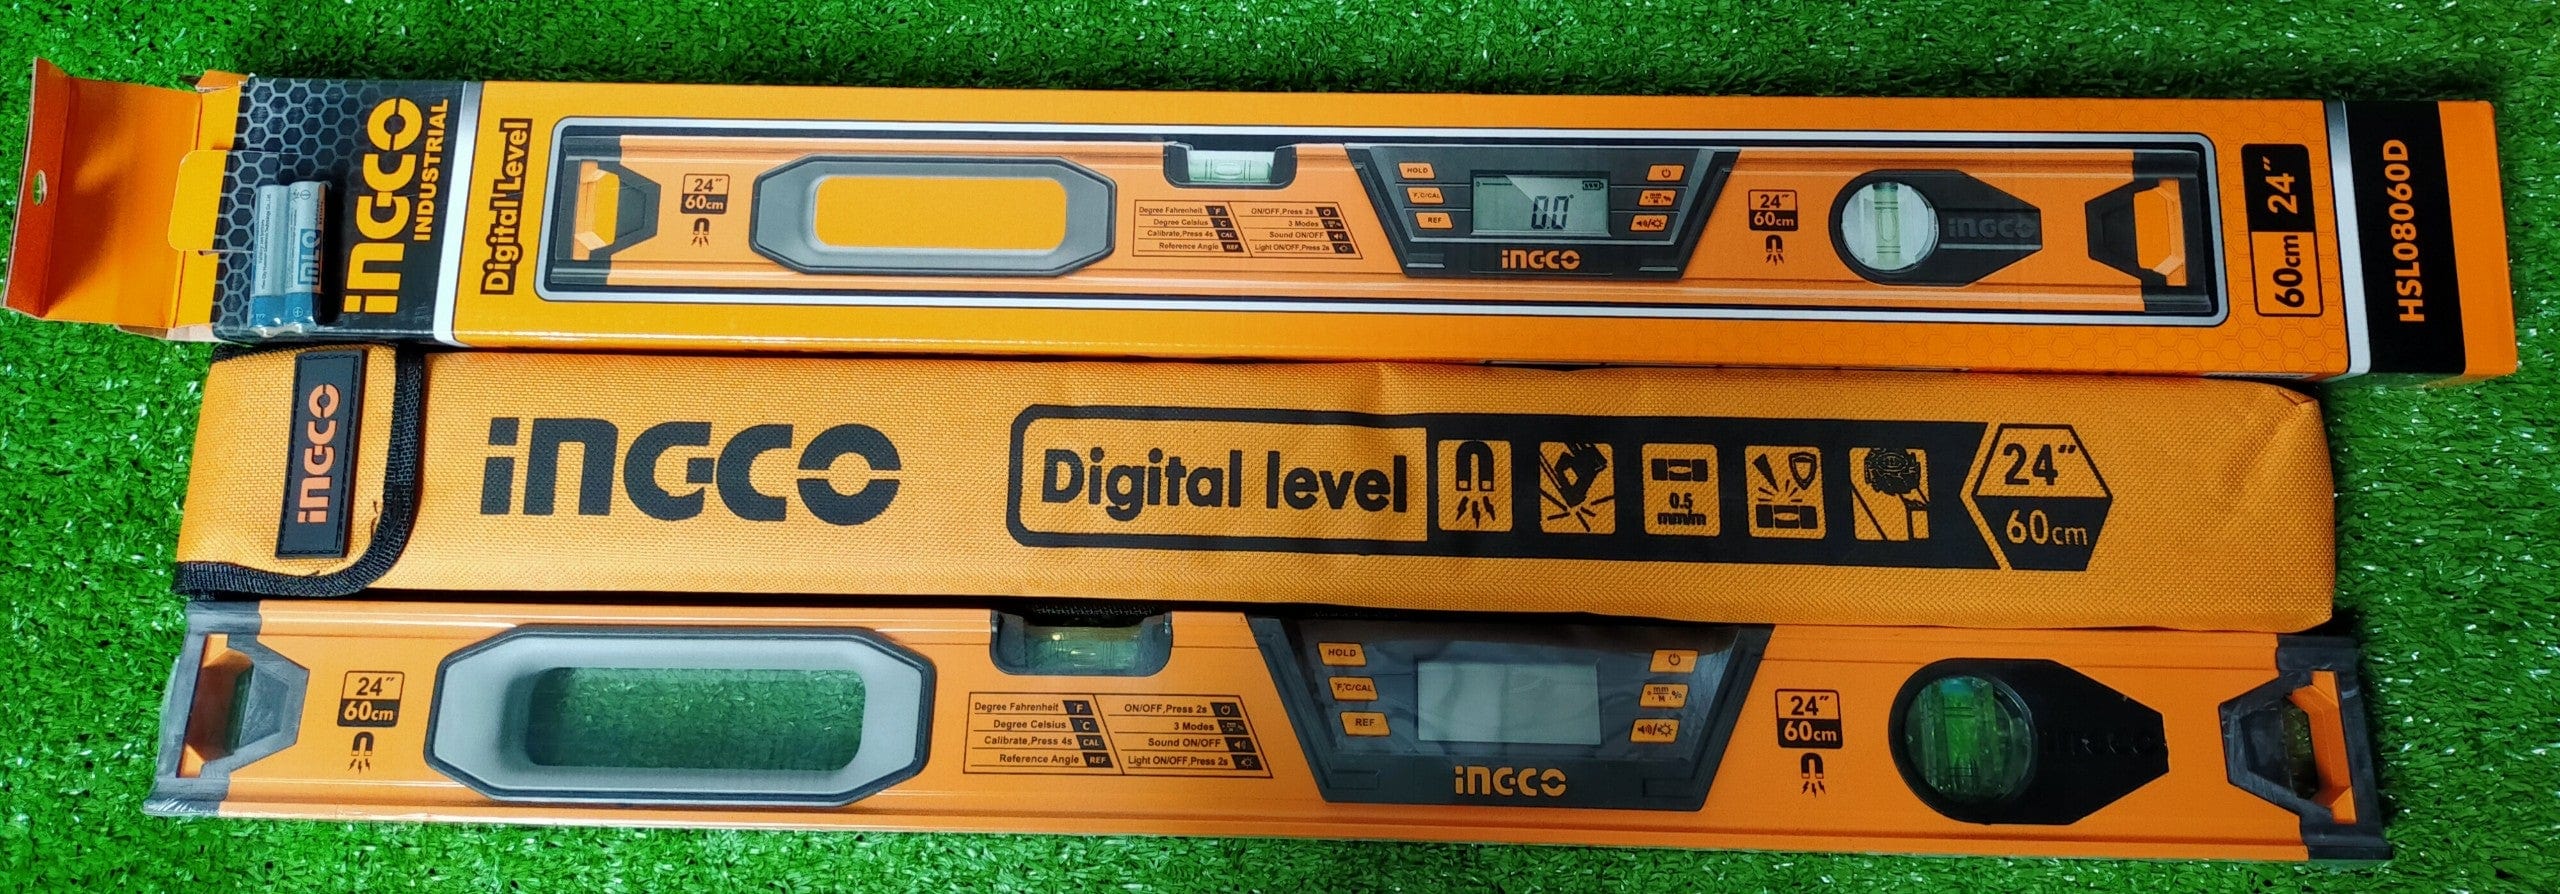 Ingco Digital Spirit Level - HSL08060D | Supply Master | Accra, Ghana Level Buy Tools hardware Building materials